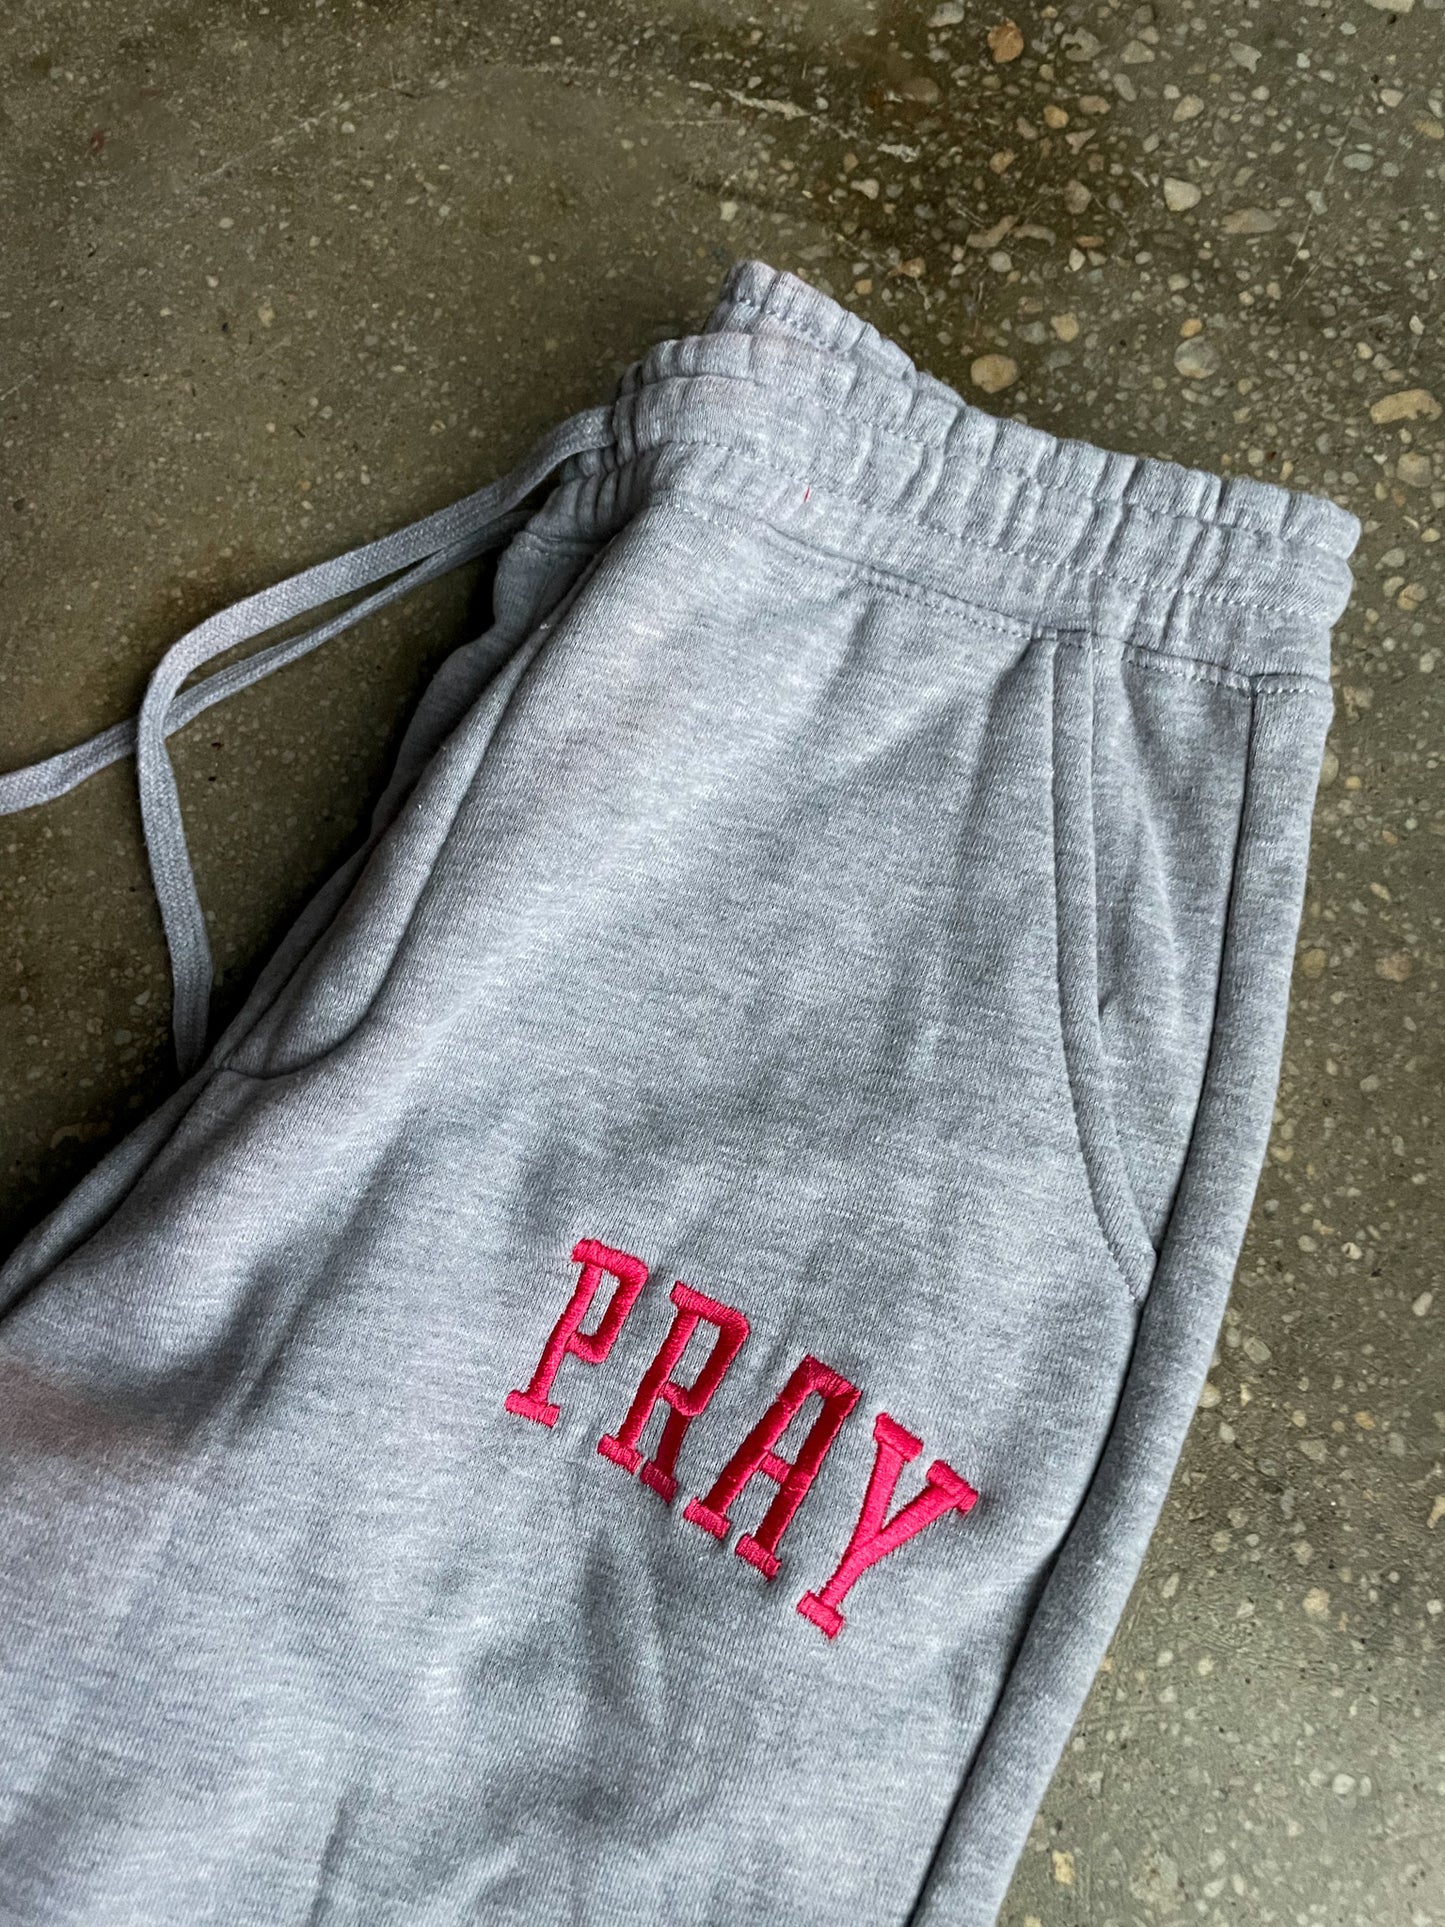 PRAY Embroidered Adult/Unisex Sweatpants